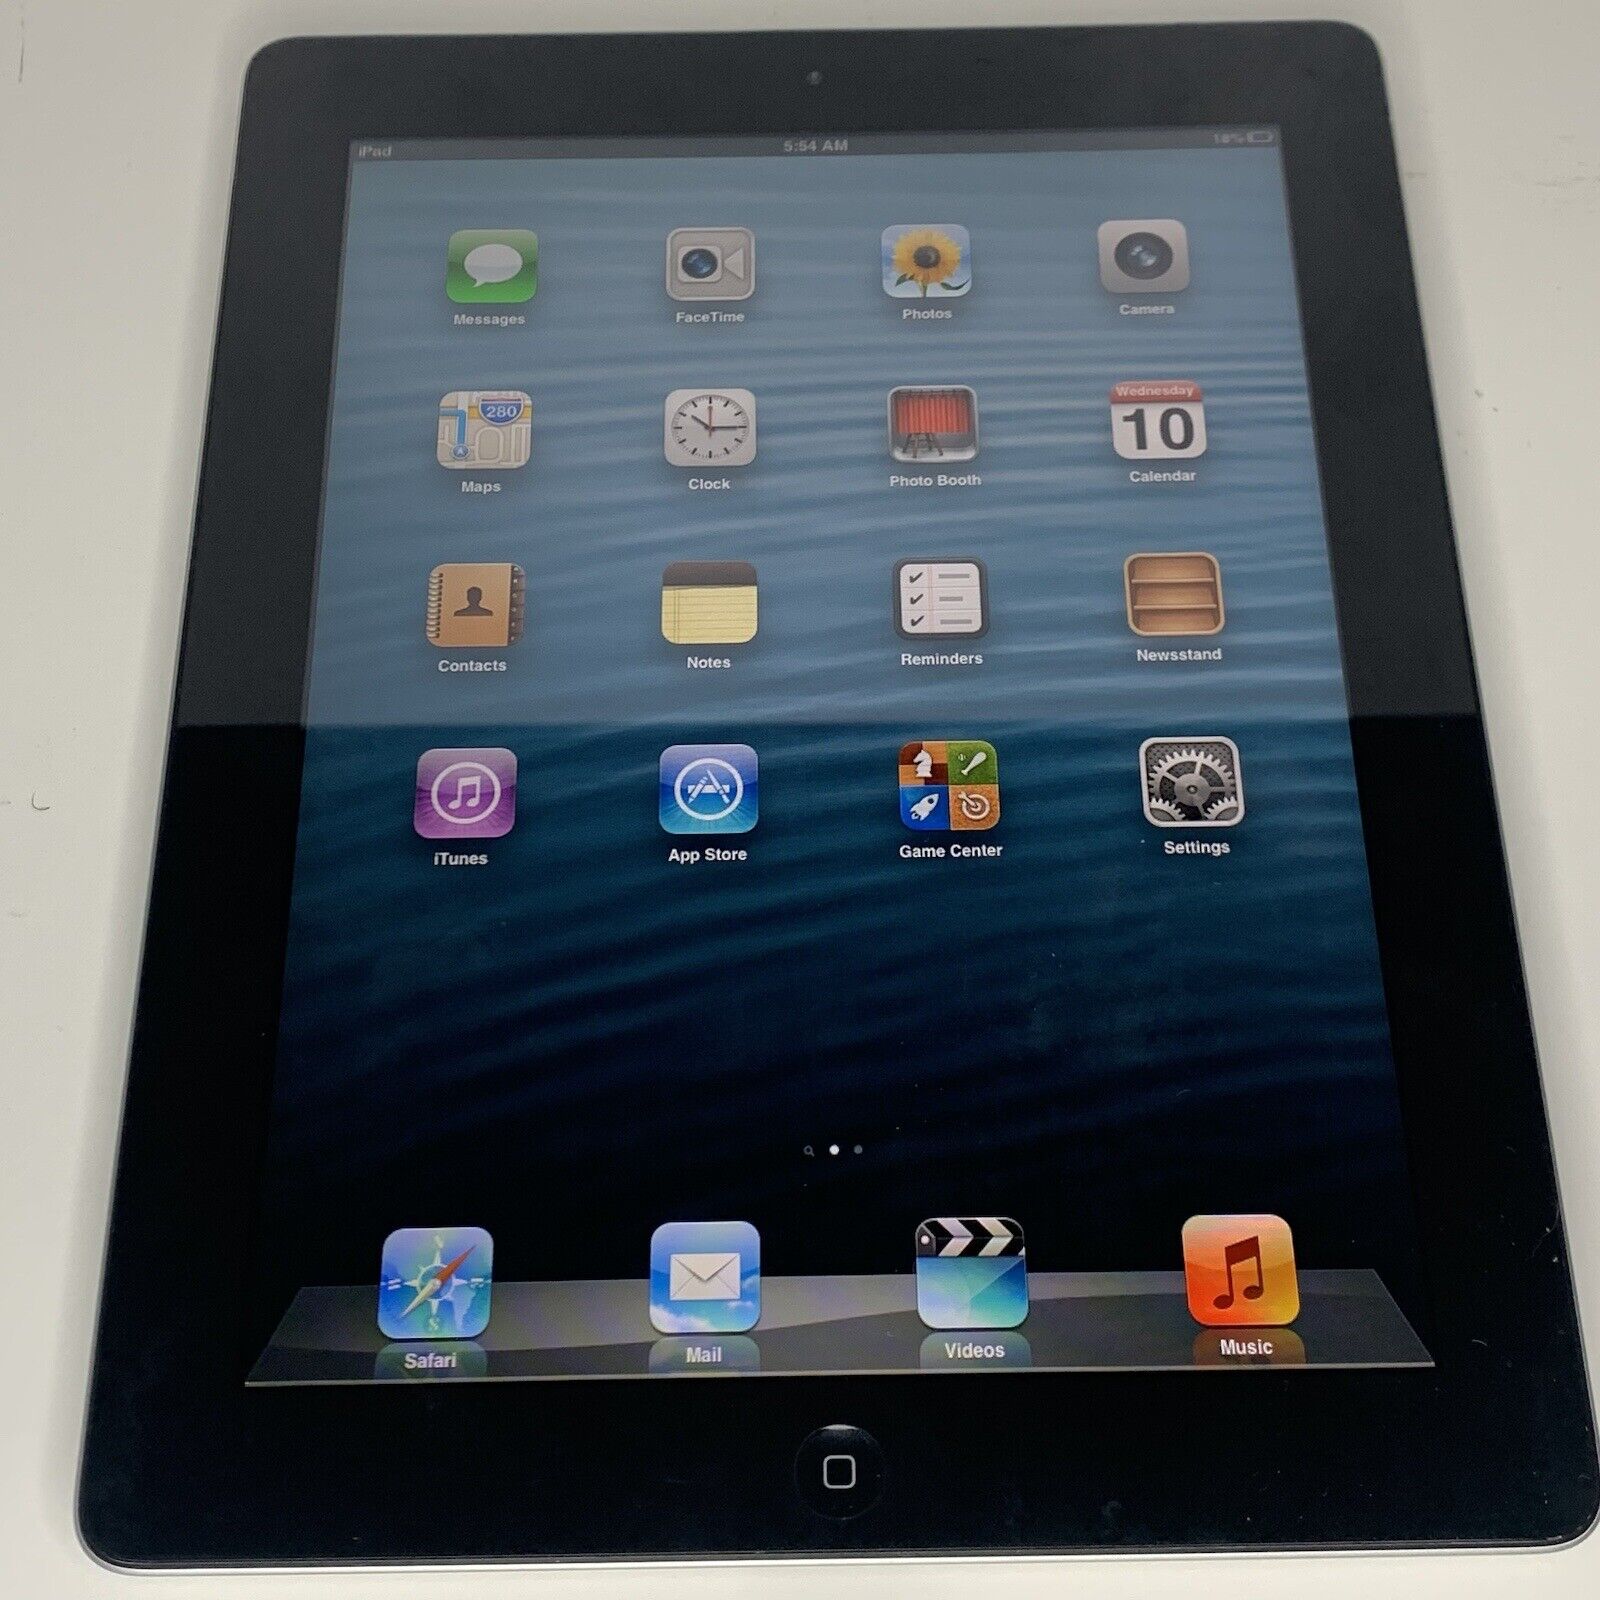 Apple iPad 2 A1395 16GB Wi-Fi | RARE iOS 6 (6.1.2) | JB | GREAT CONDITION